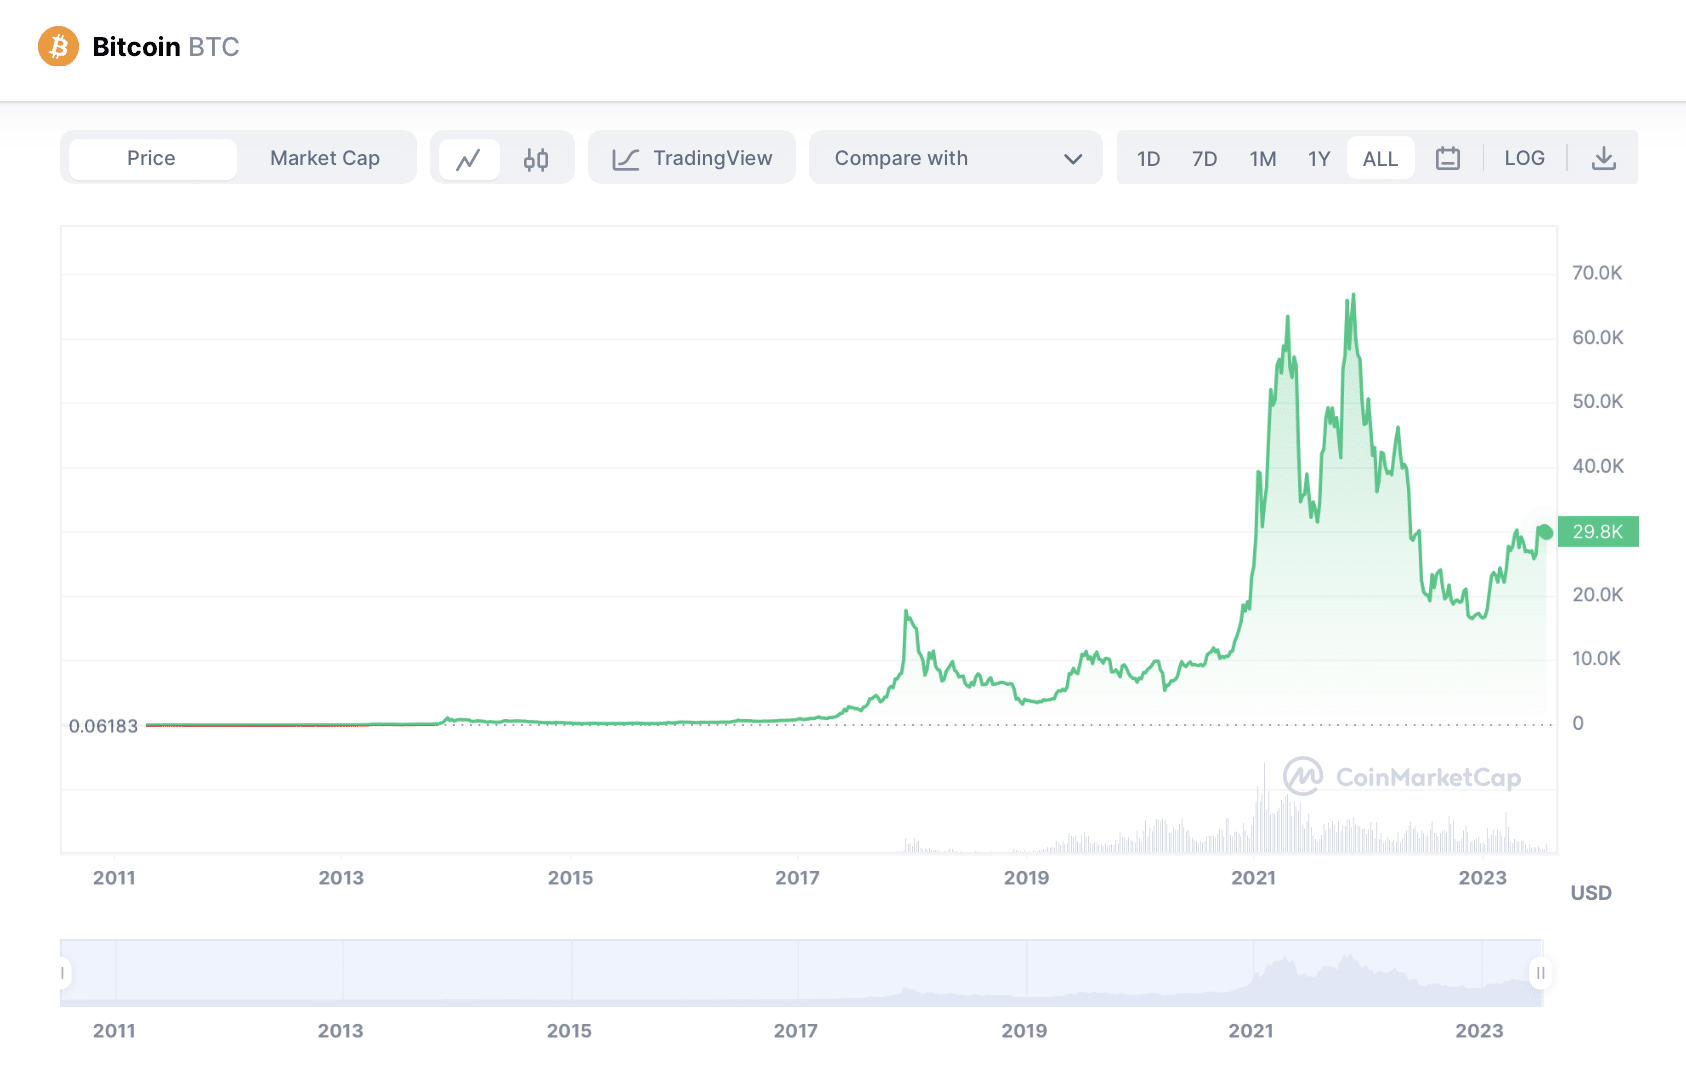 Graf vývoje ceny bitcoinu